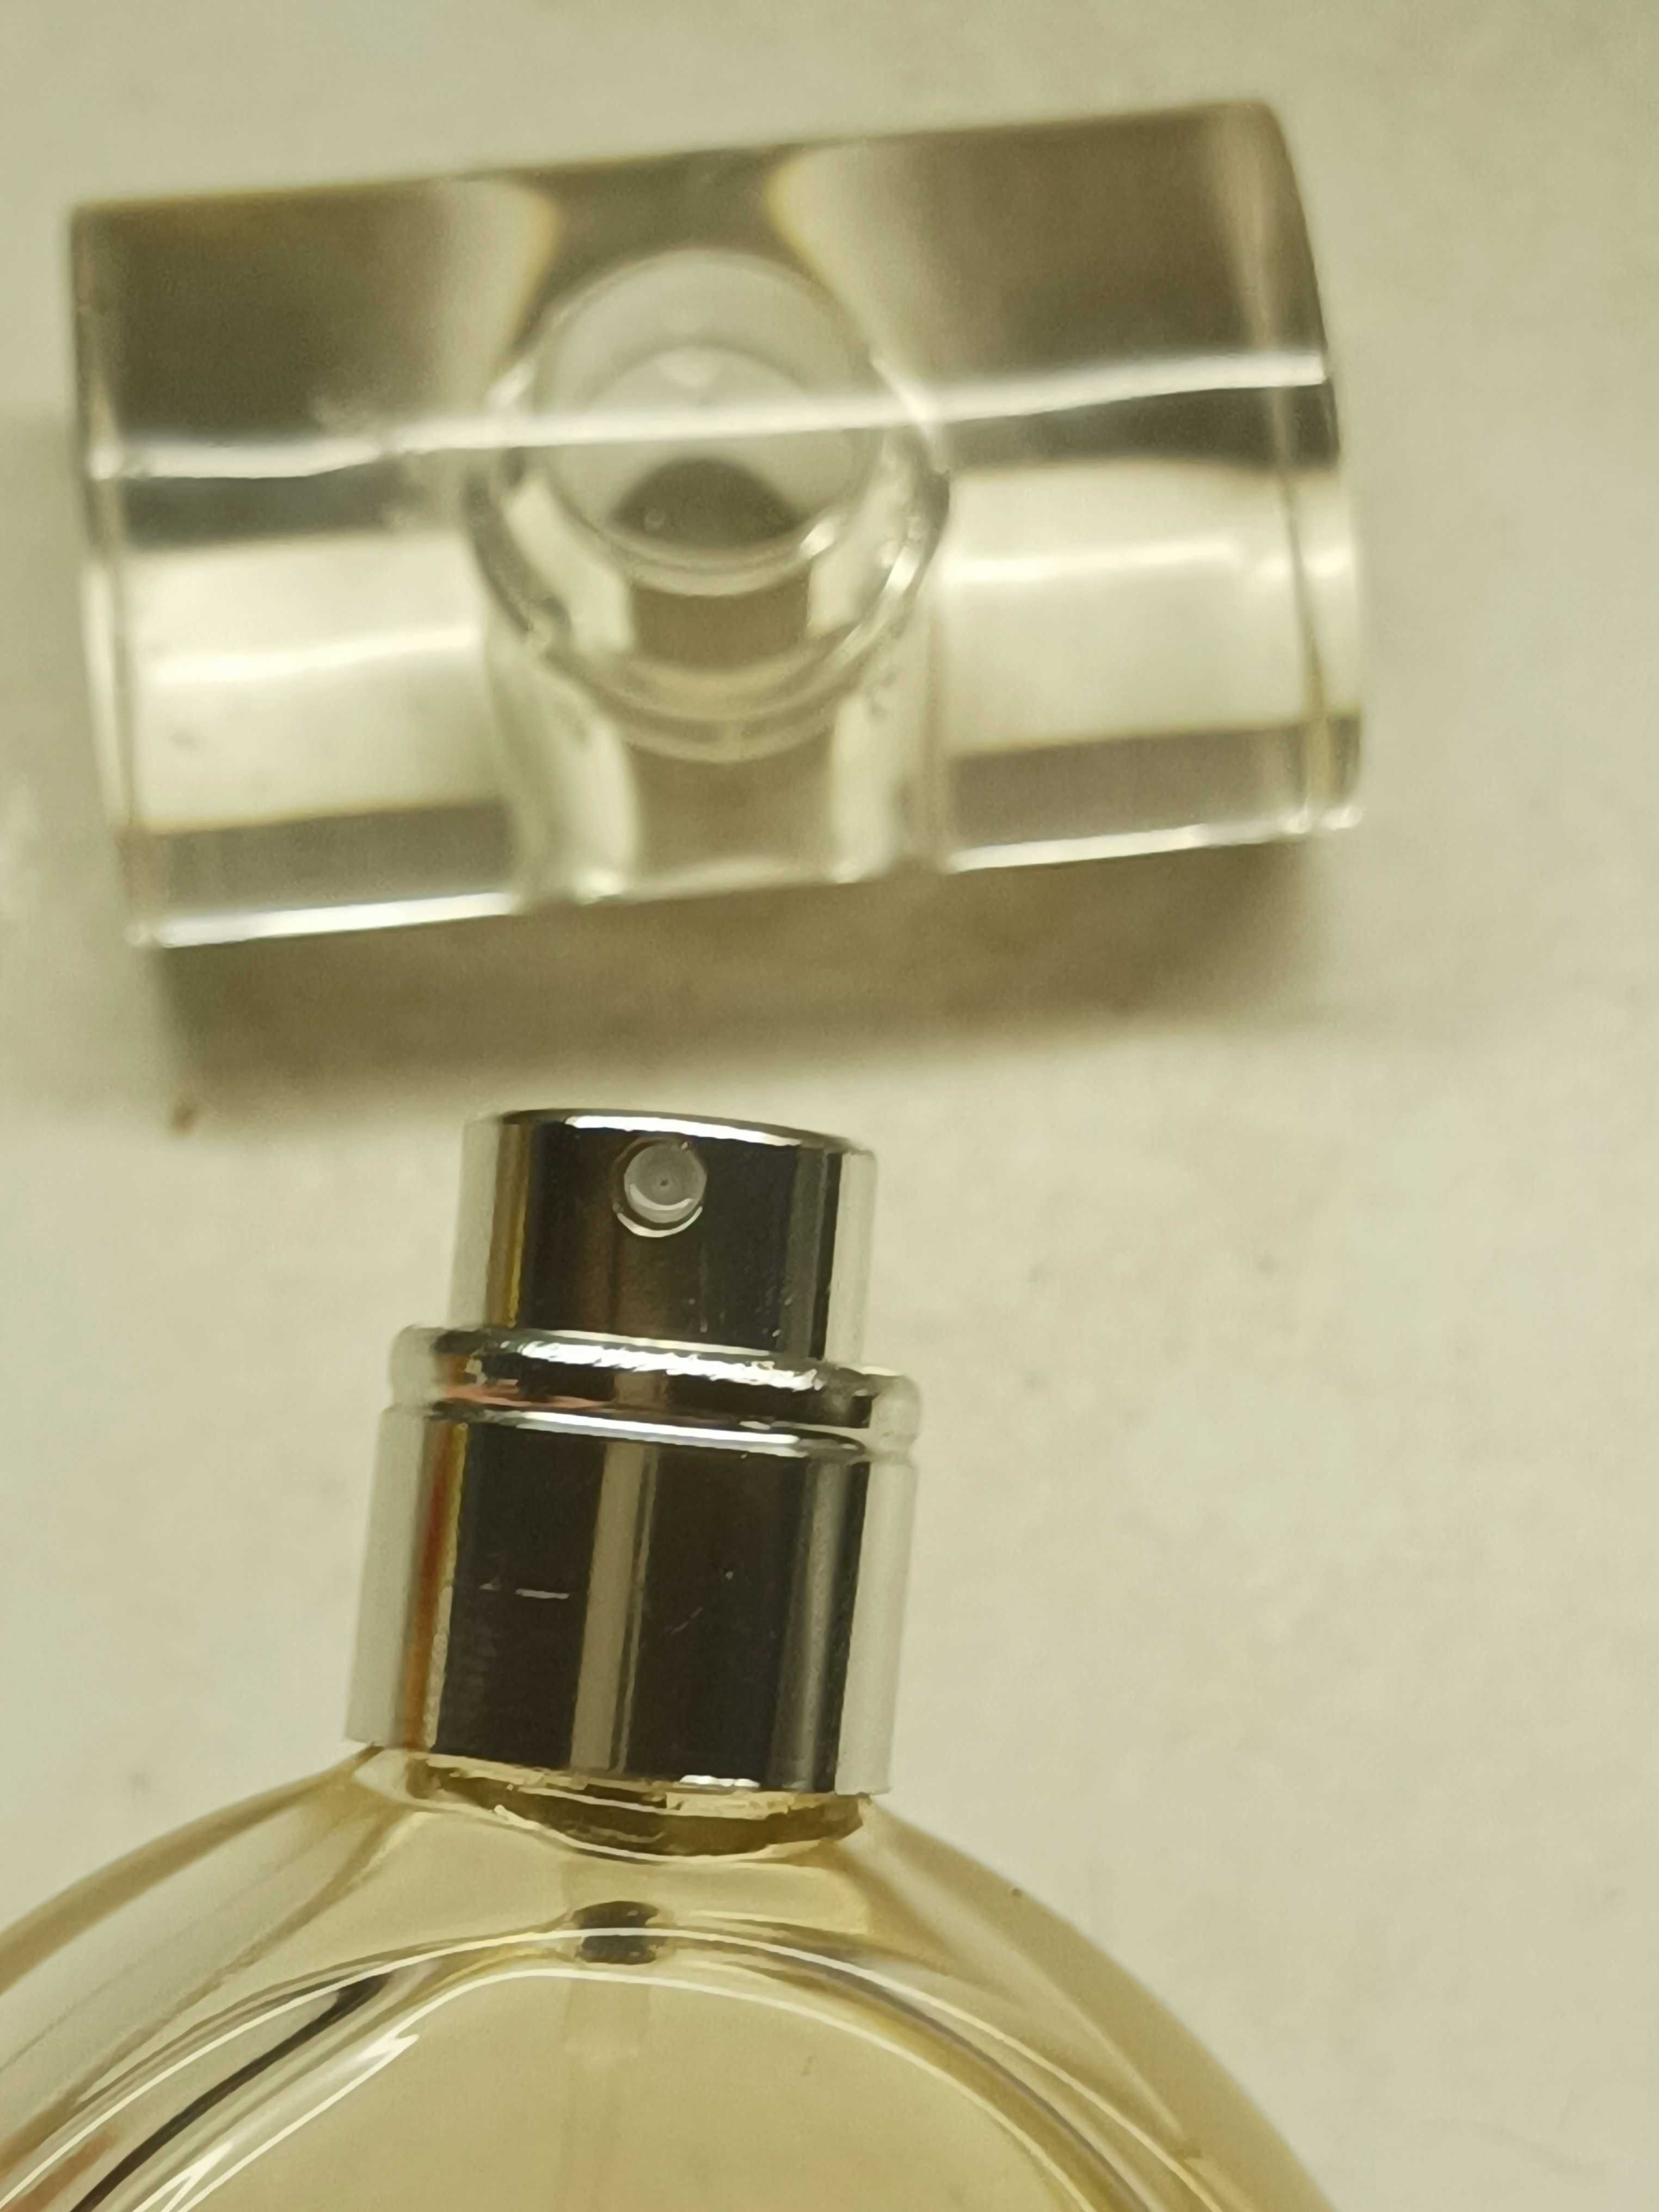 Calvin Klein Bauty parfum 100 ml оригинал.